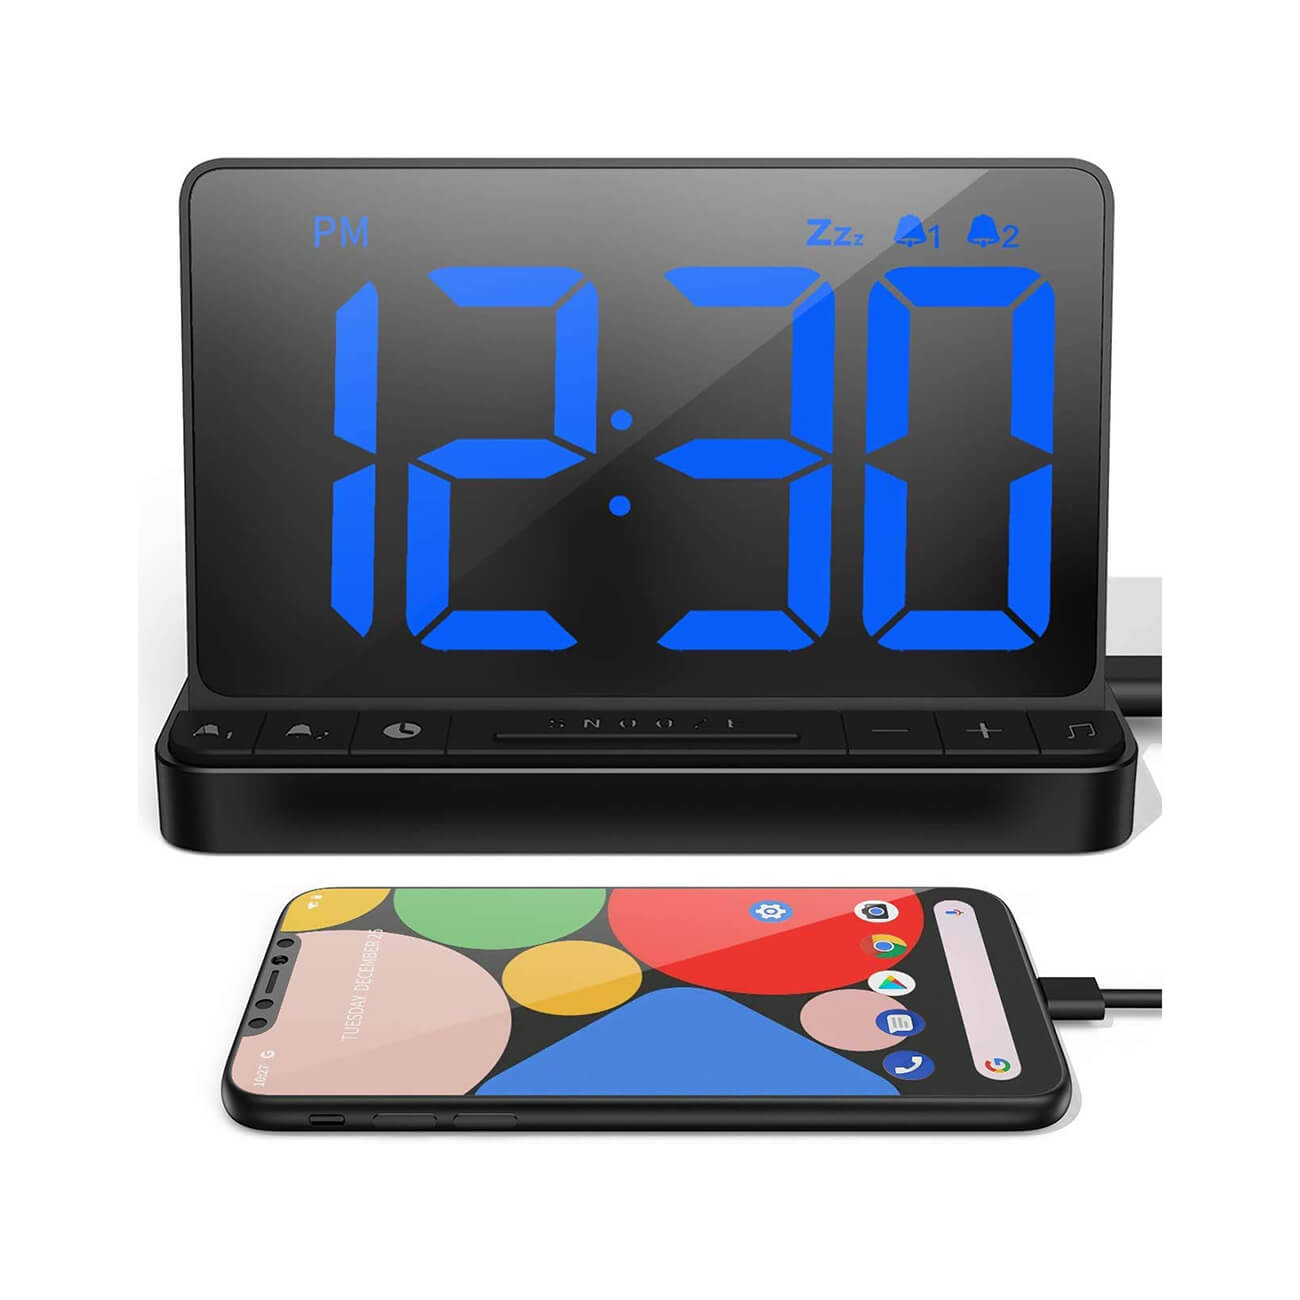 Aalarm Clcok | Digital Alarm Clock with USB Charger Port